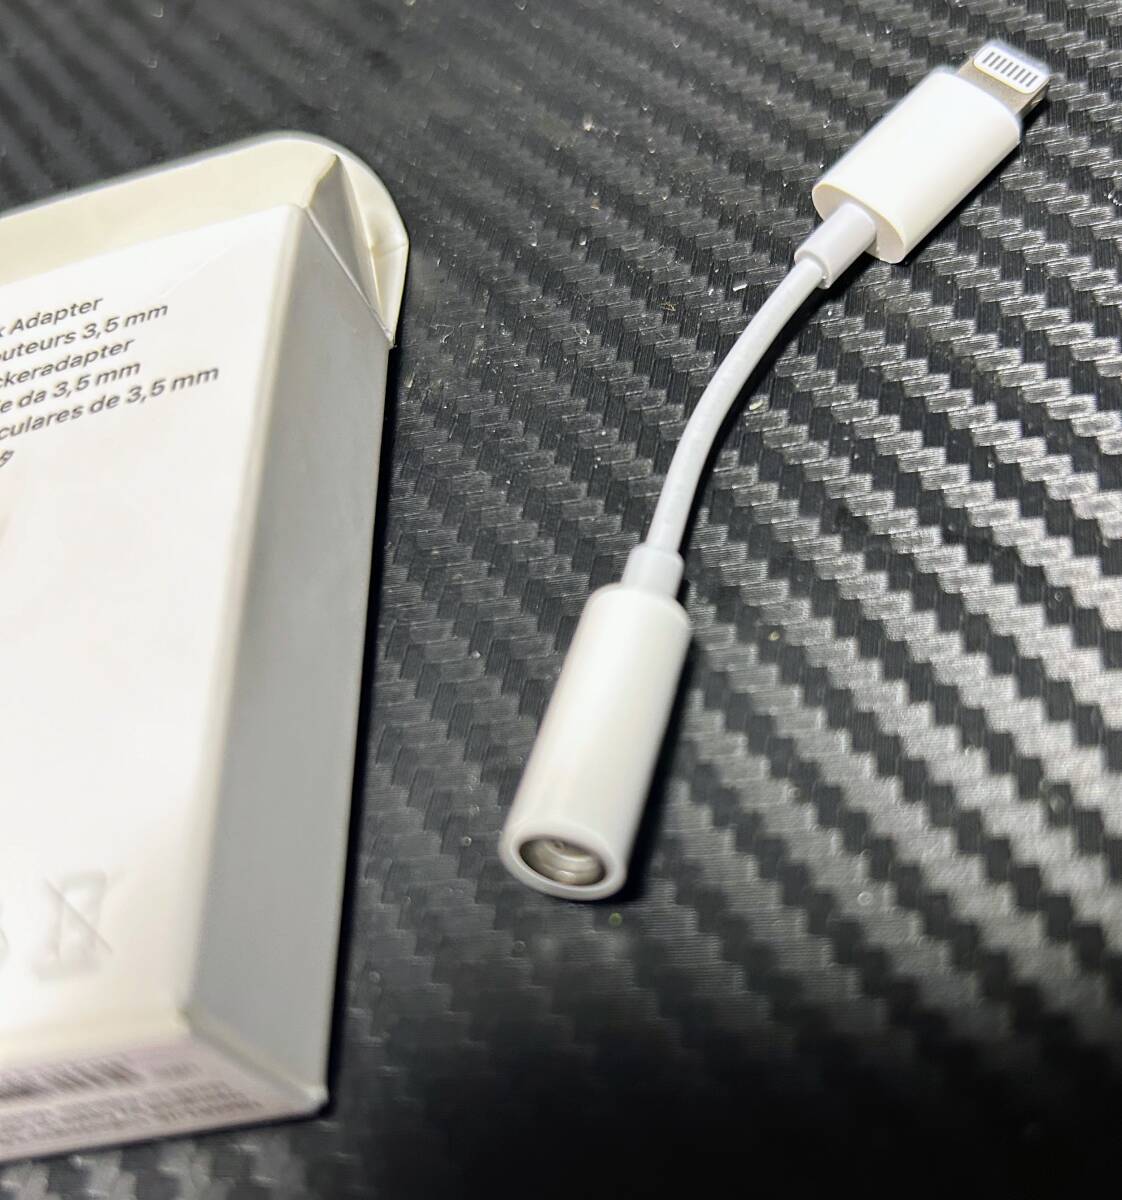  as good as new *Apple original *iPhone for * lightning - earphone jack conversion adapter *3.5mm* connector *Lightning jack